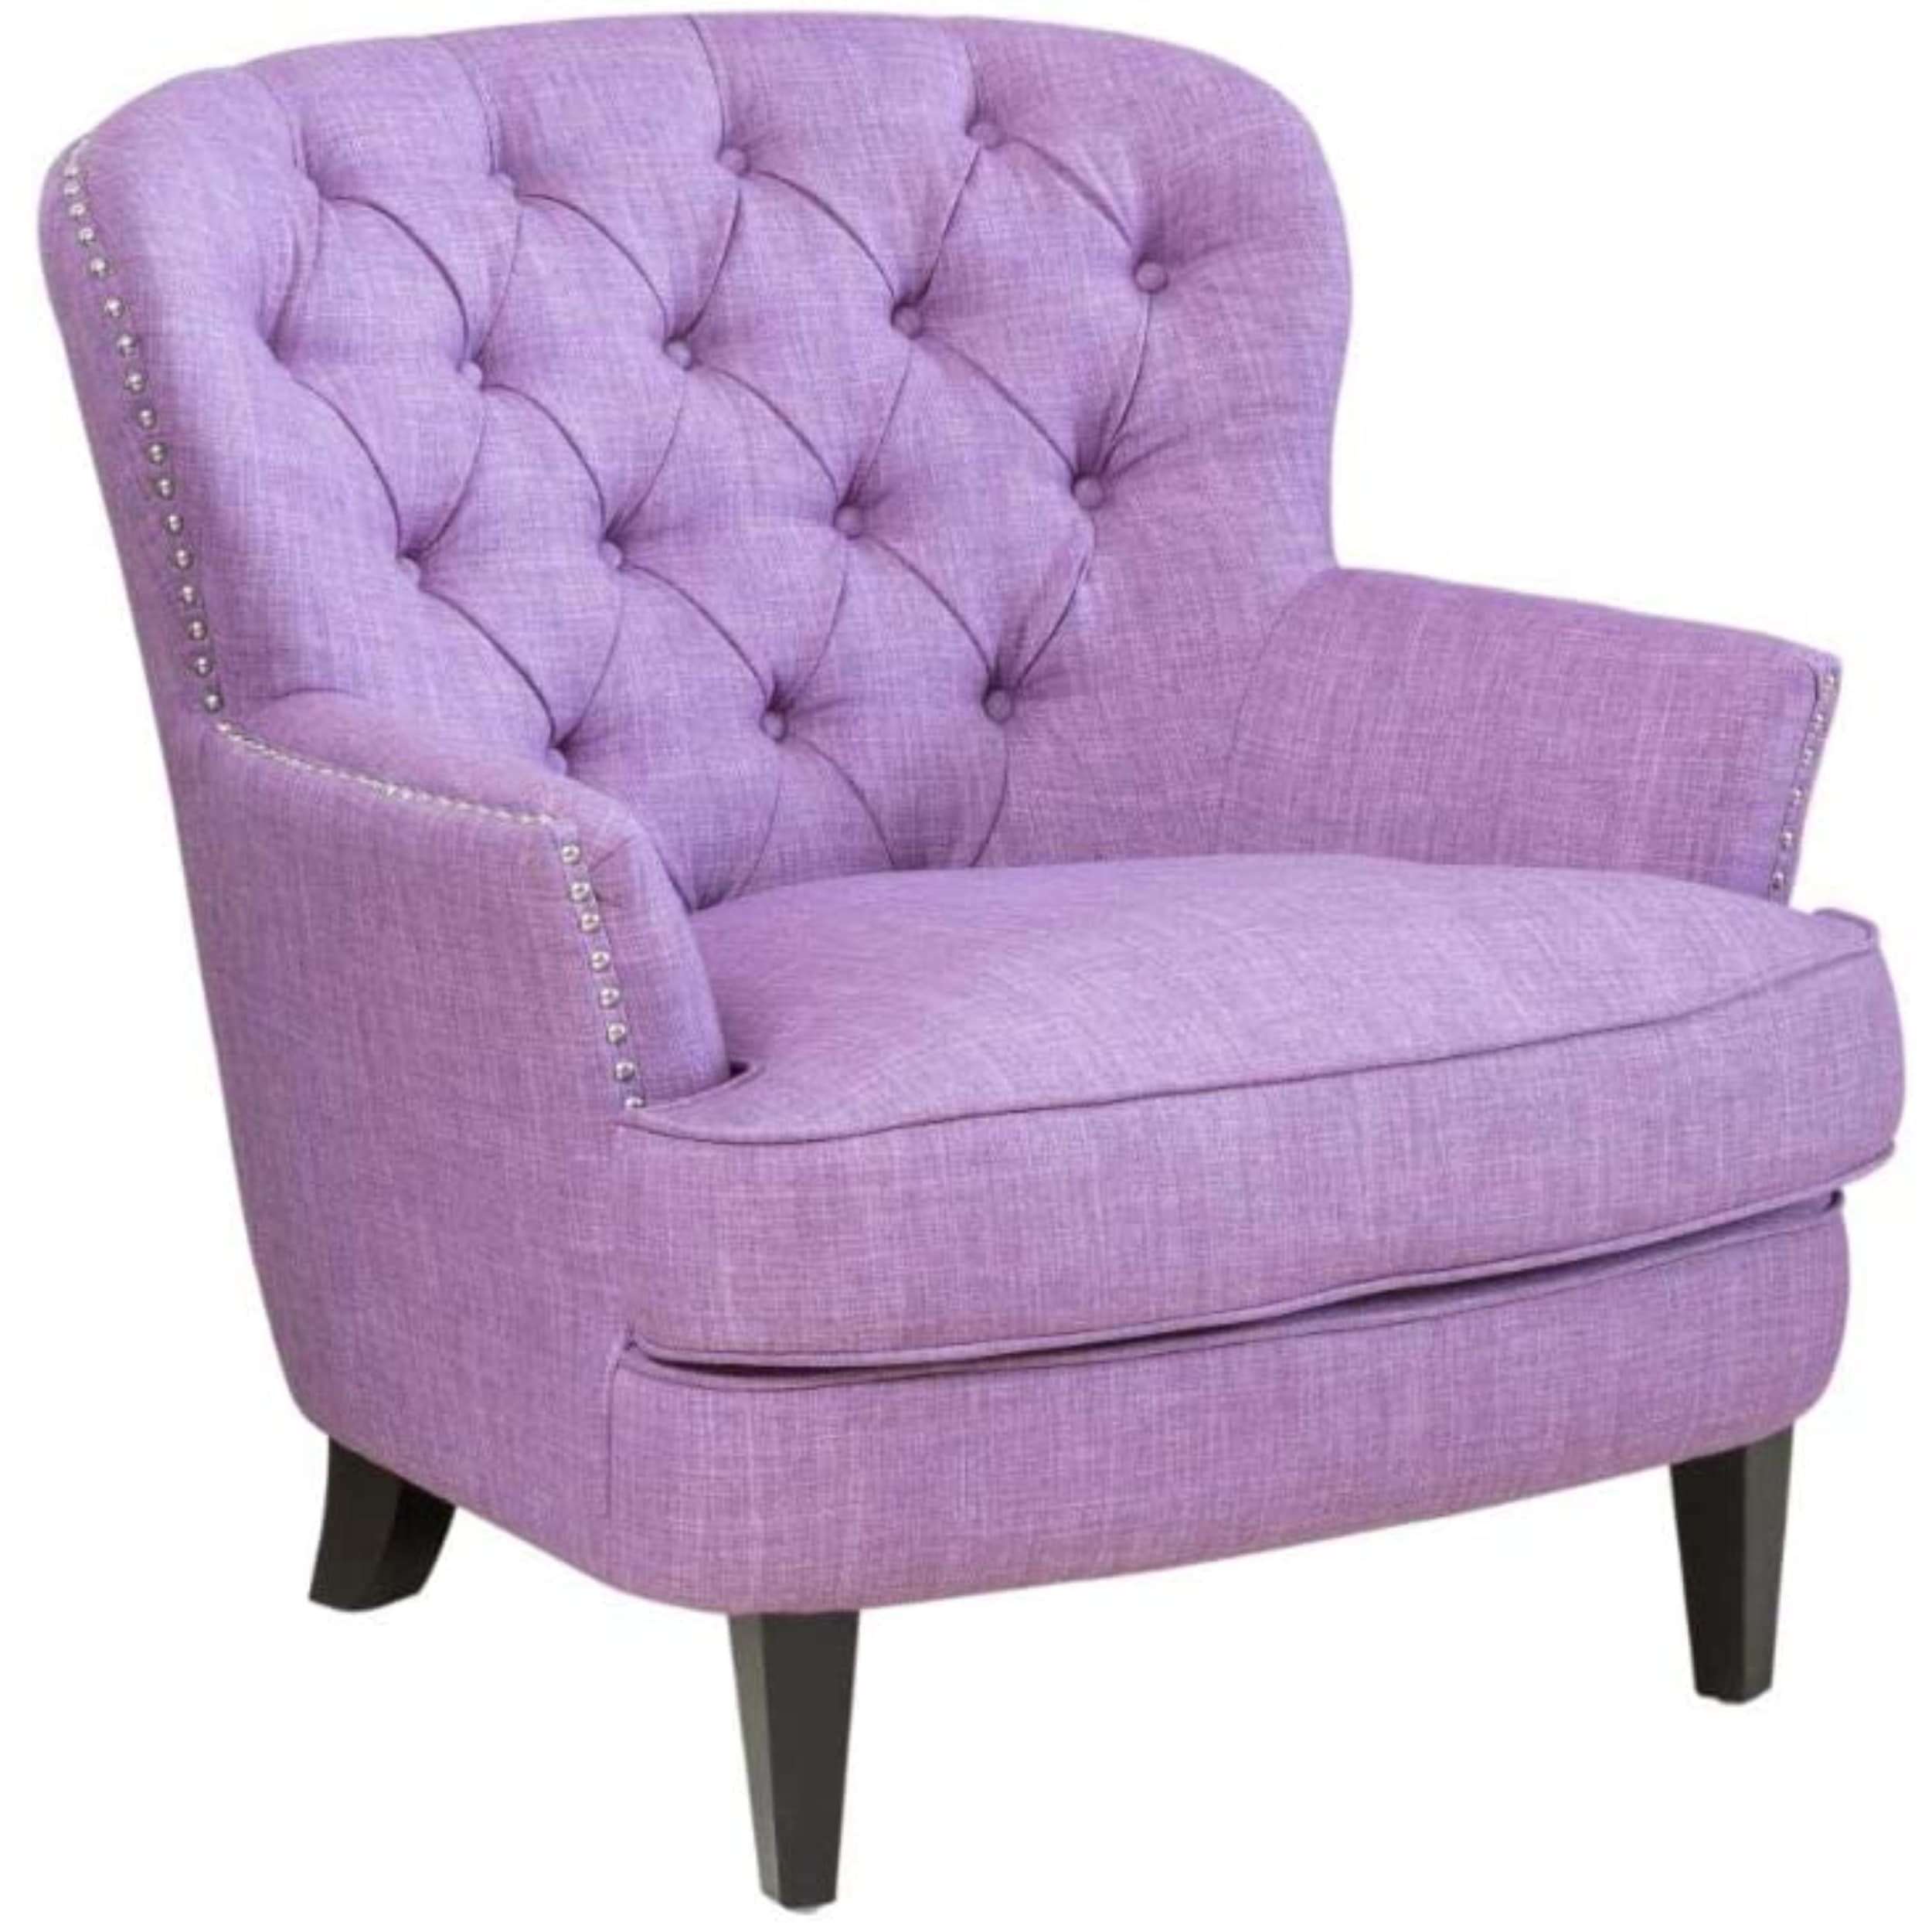 Tafton Fabric Club Chair%2C Bedroom Light Purple 